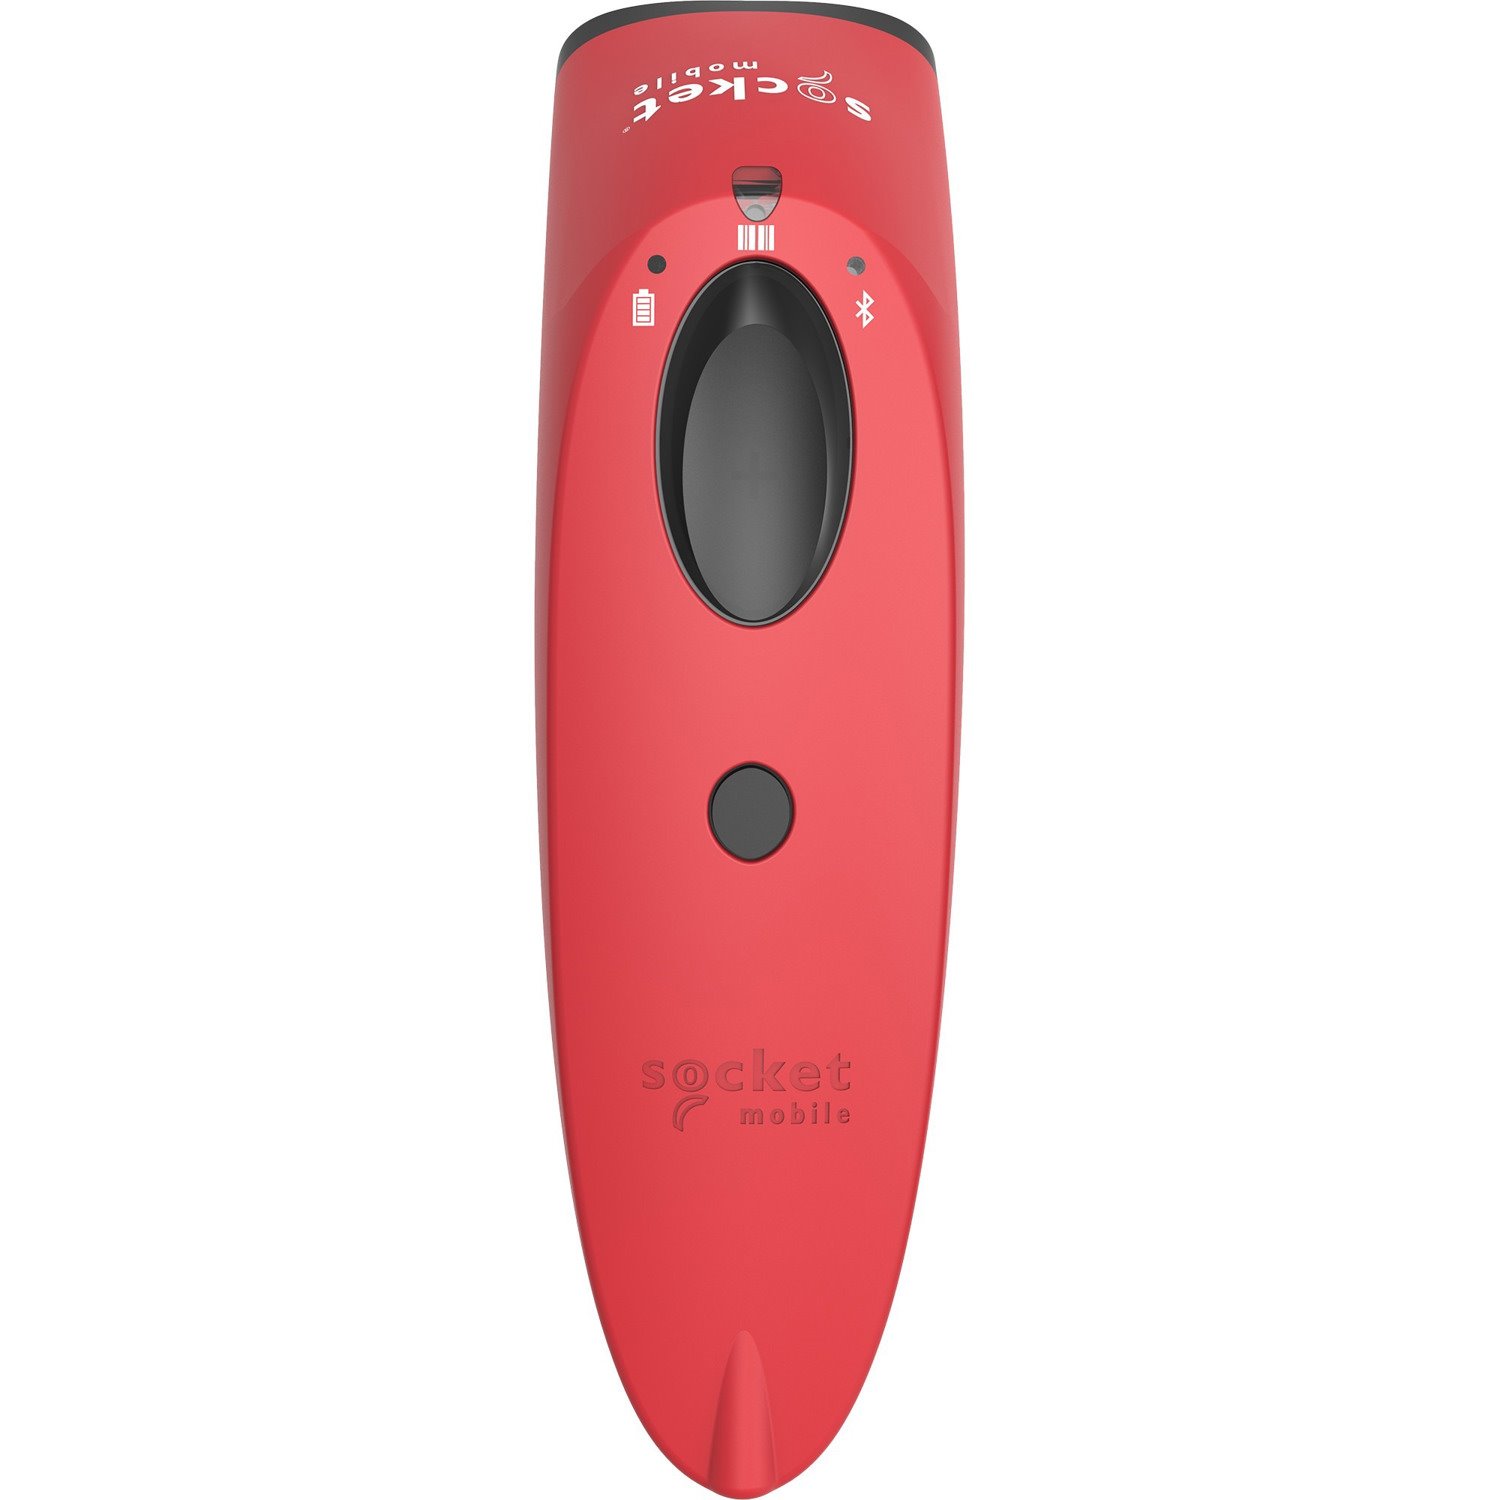 Socket Mobile SocketScan S700 Handheld Barcode Scanner - Wireless Connectivity - Red, Black